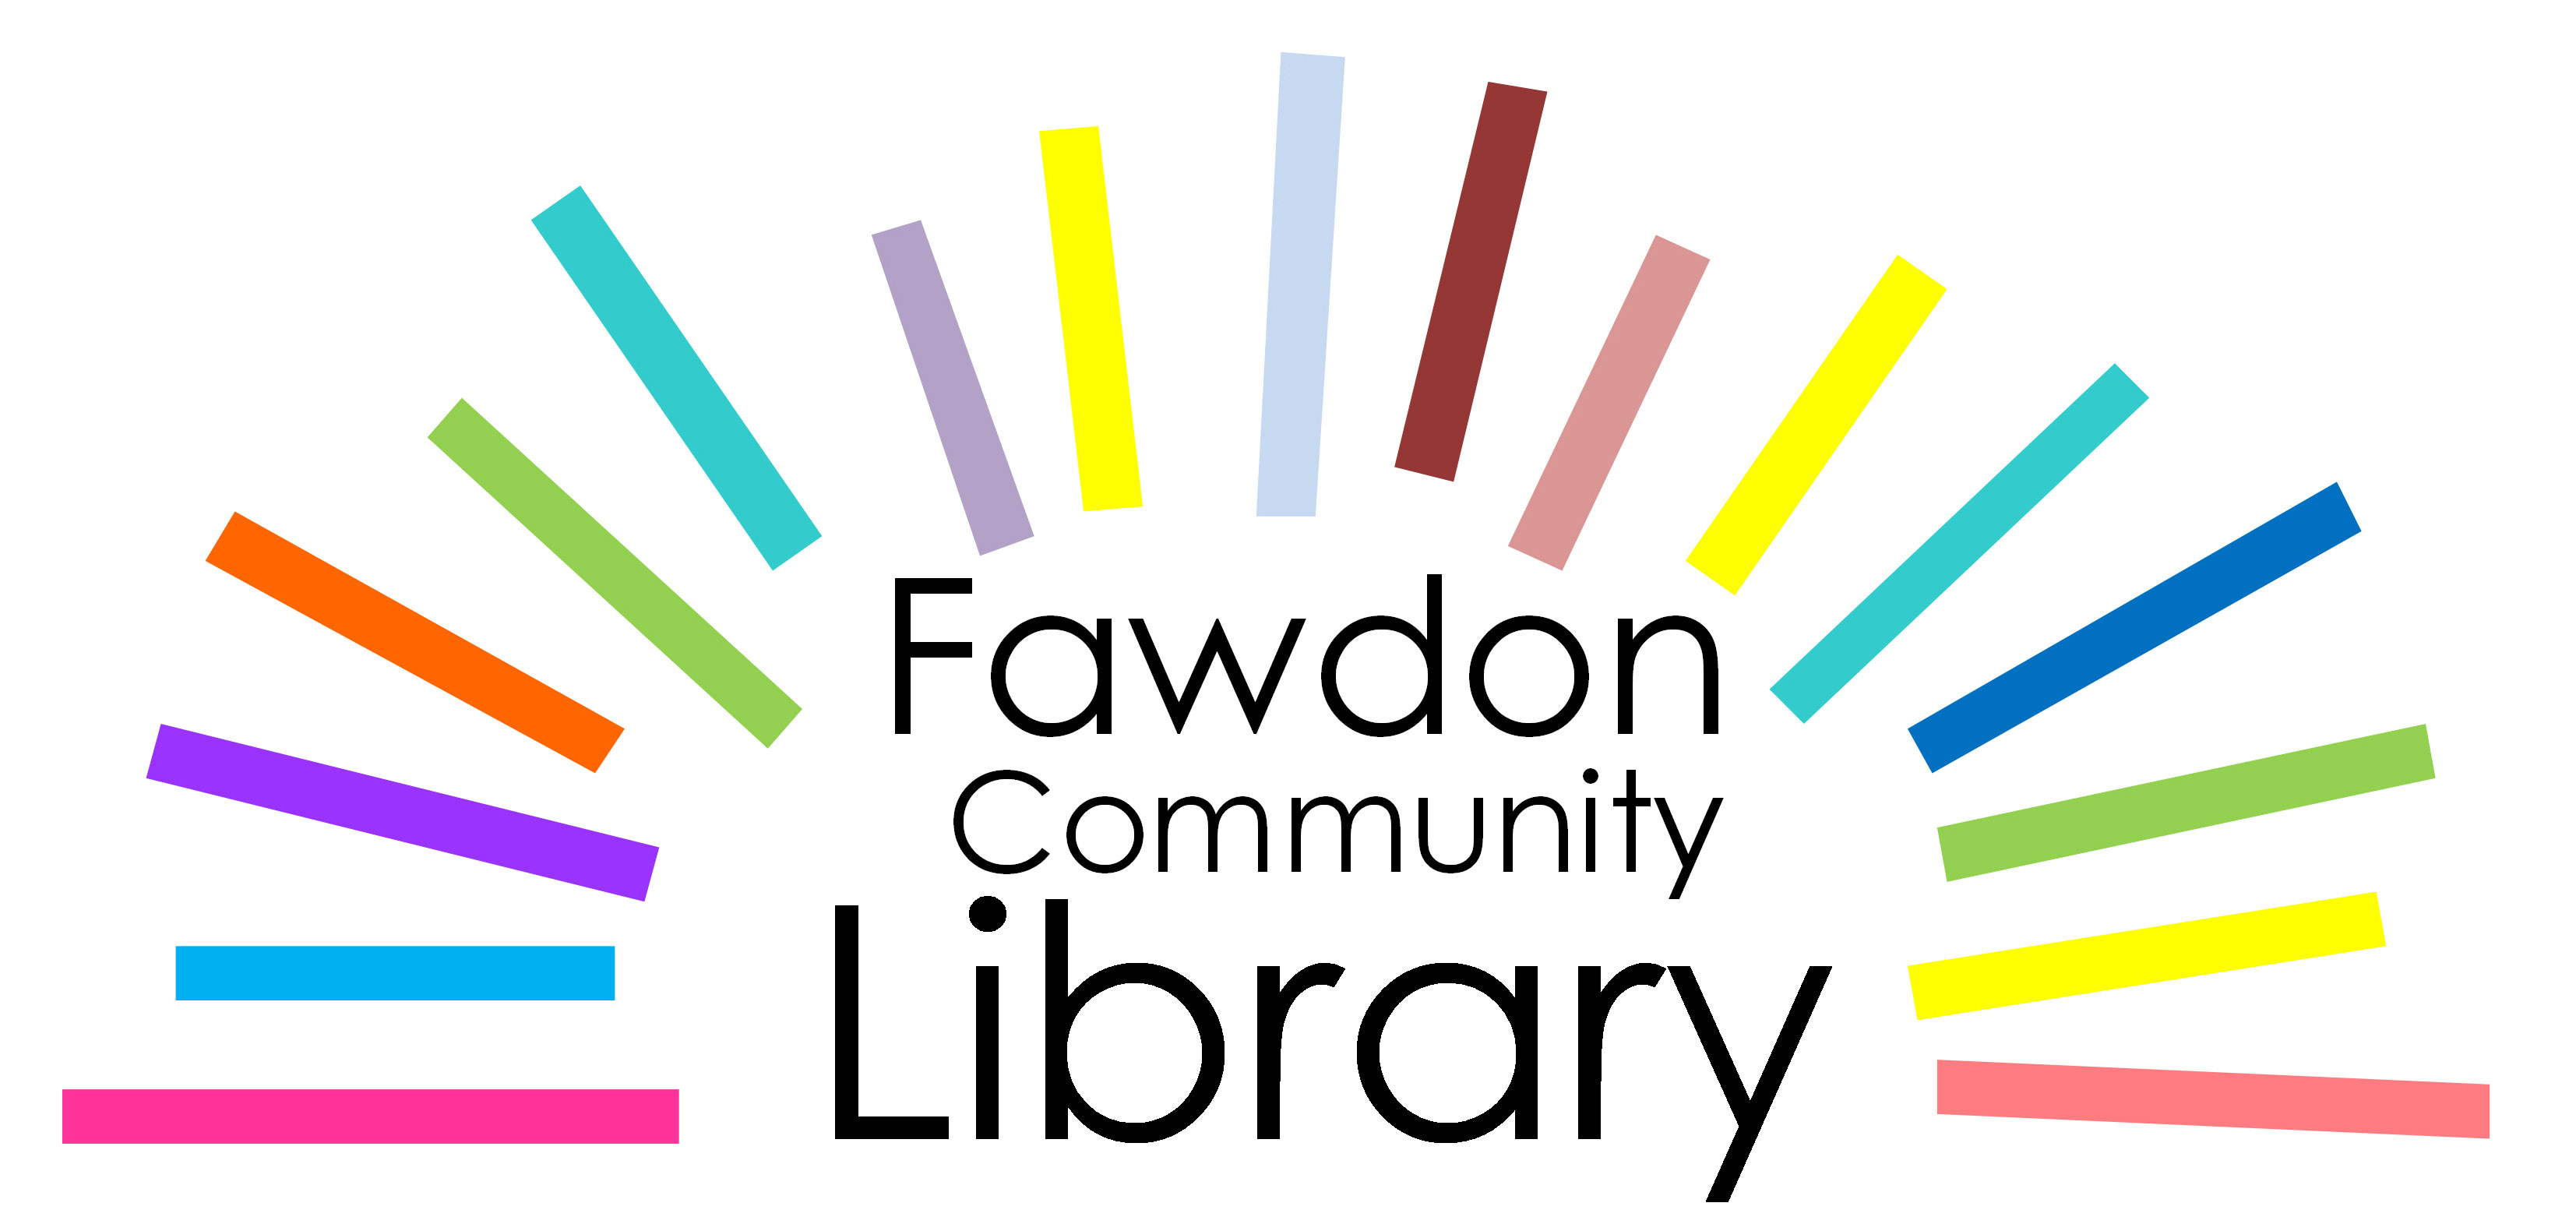 Fawdon Community Library